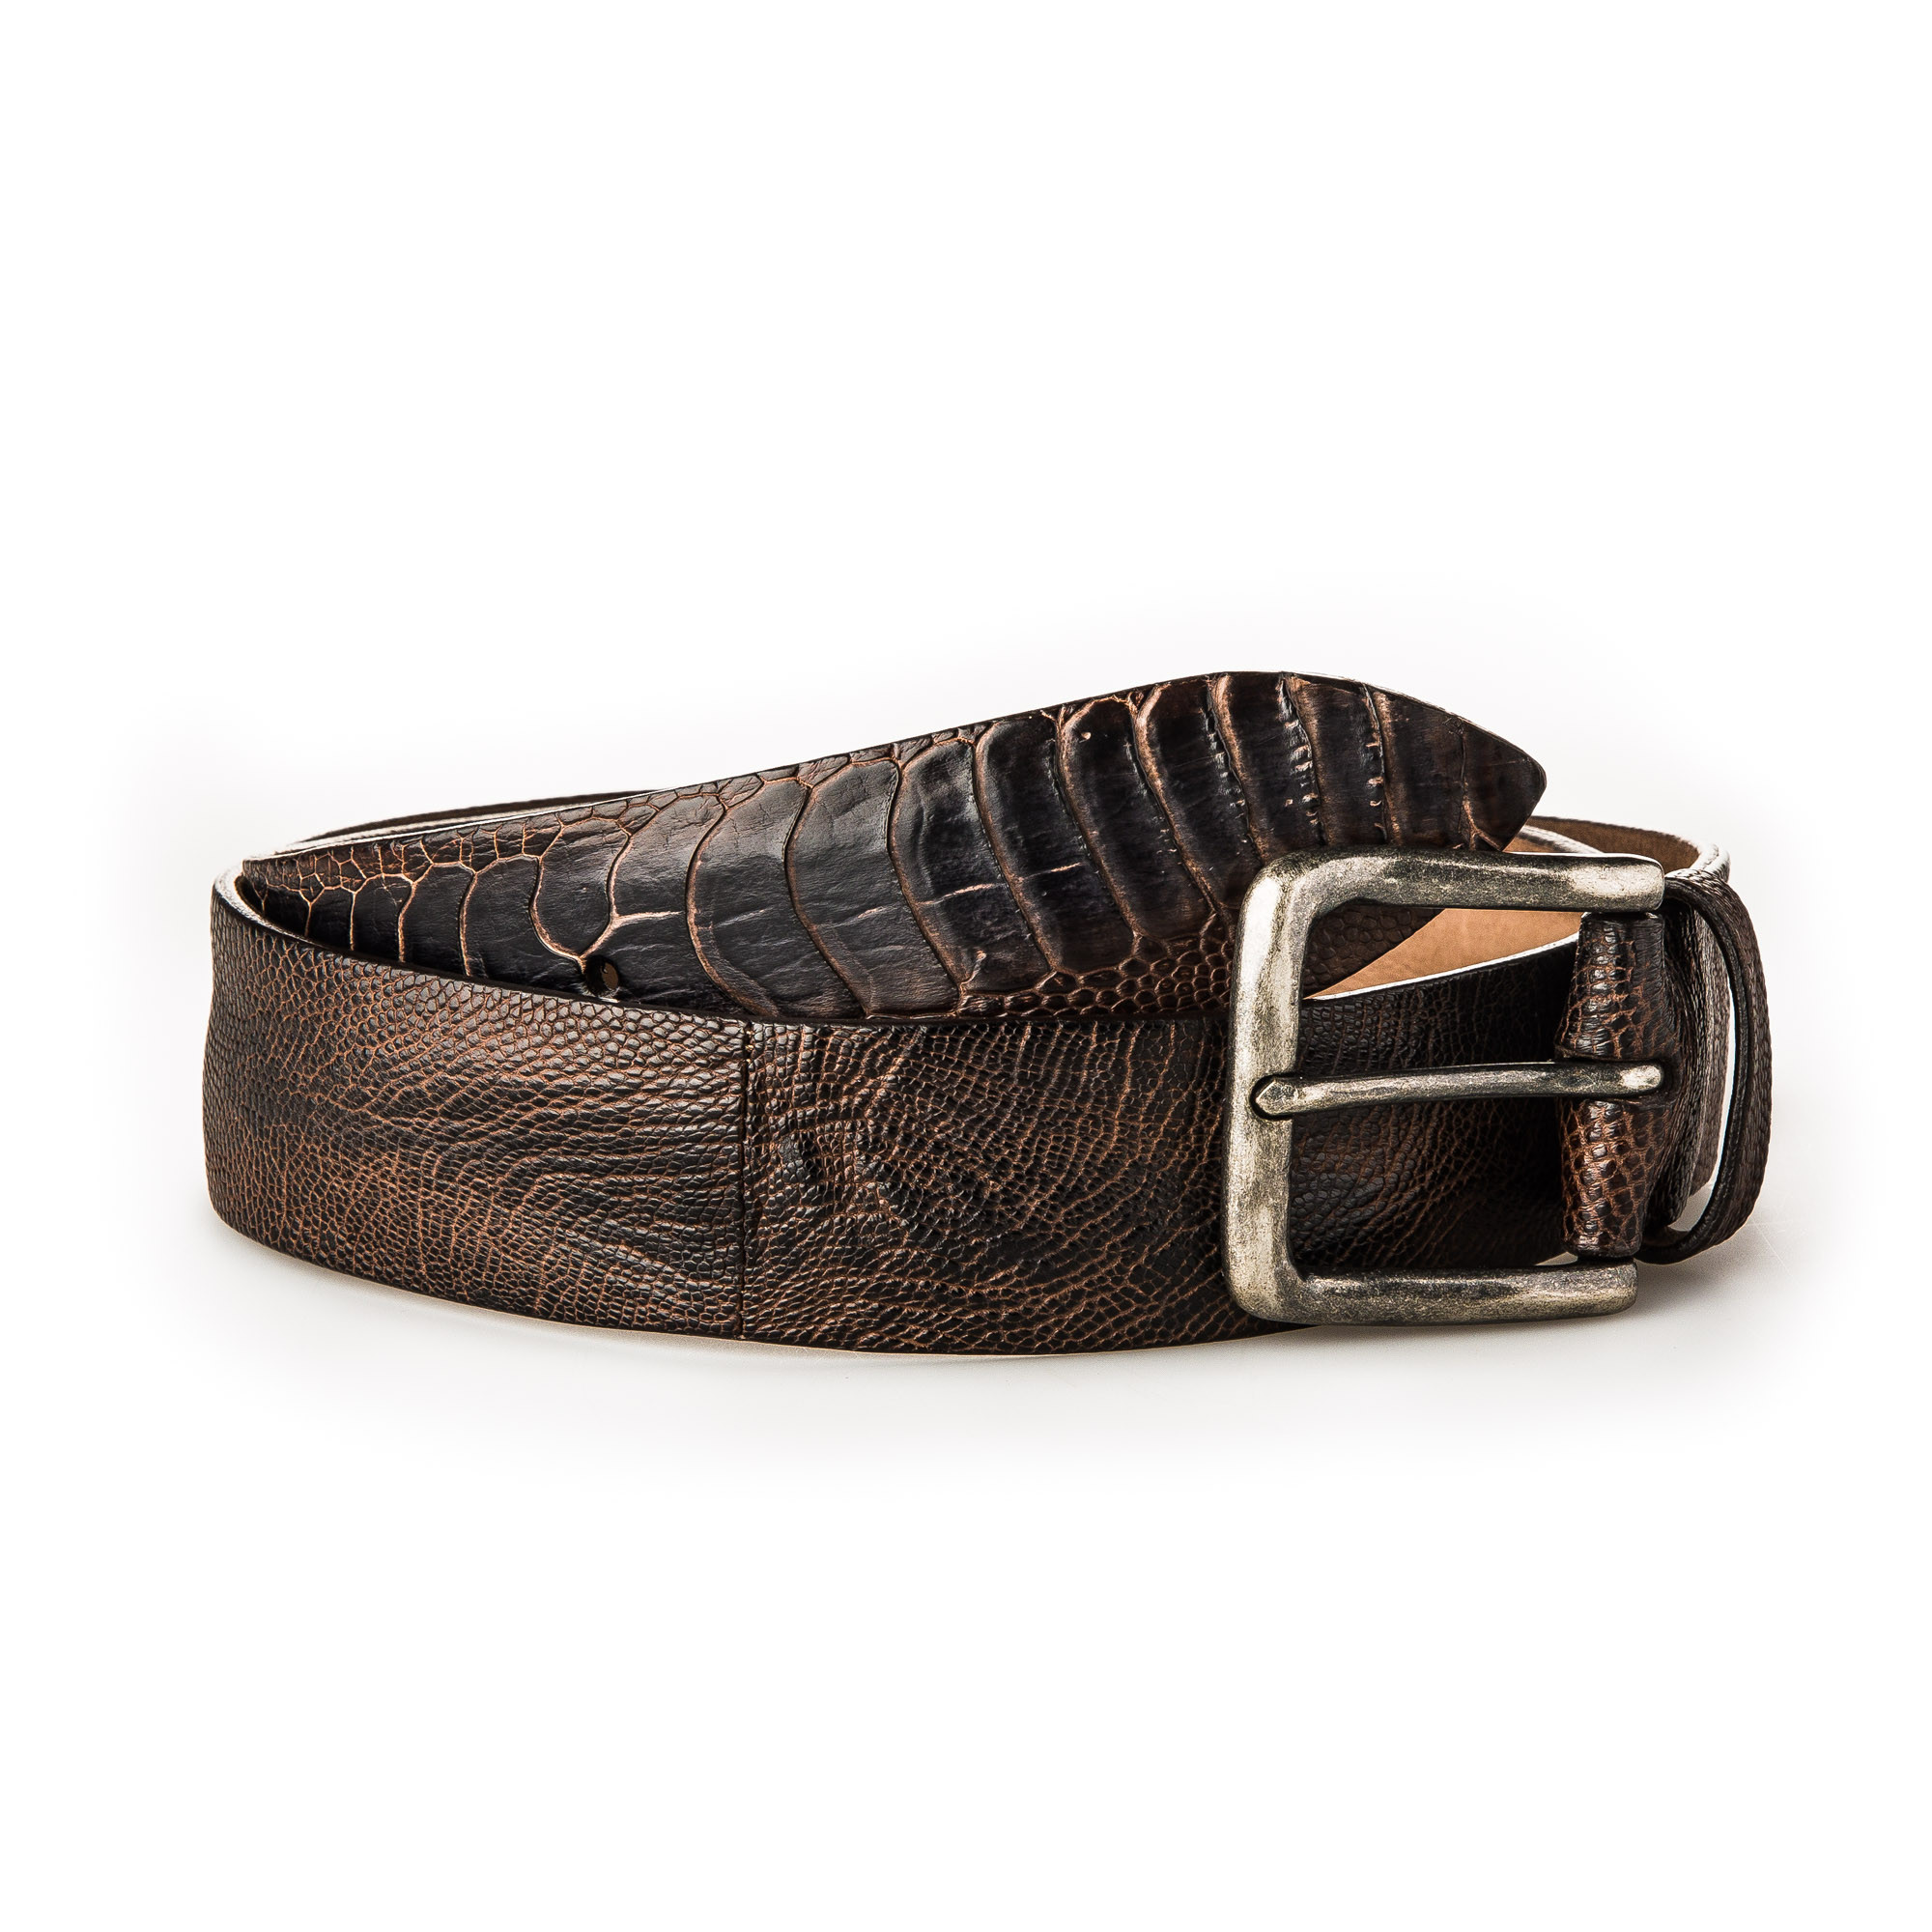 Post & Co. - Men's Ostrich Leg Leather Belt - Brown/ Black